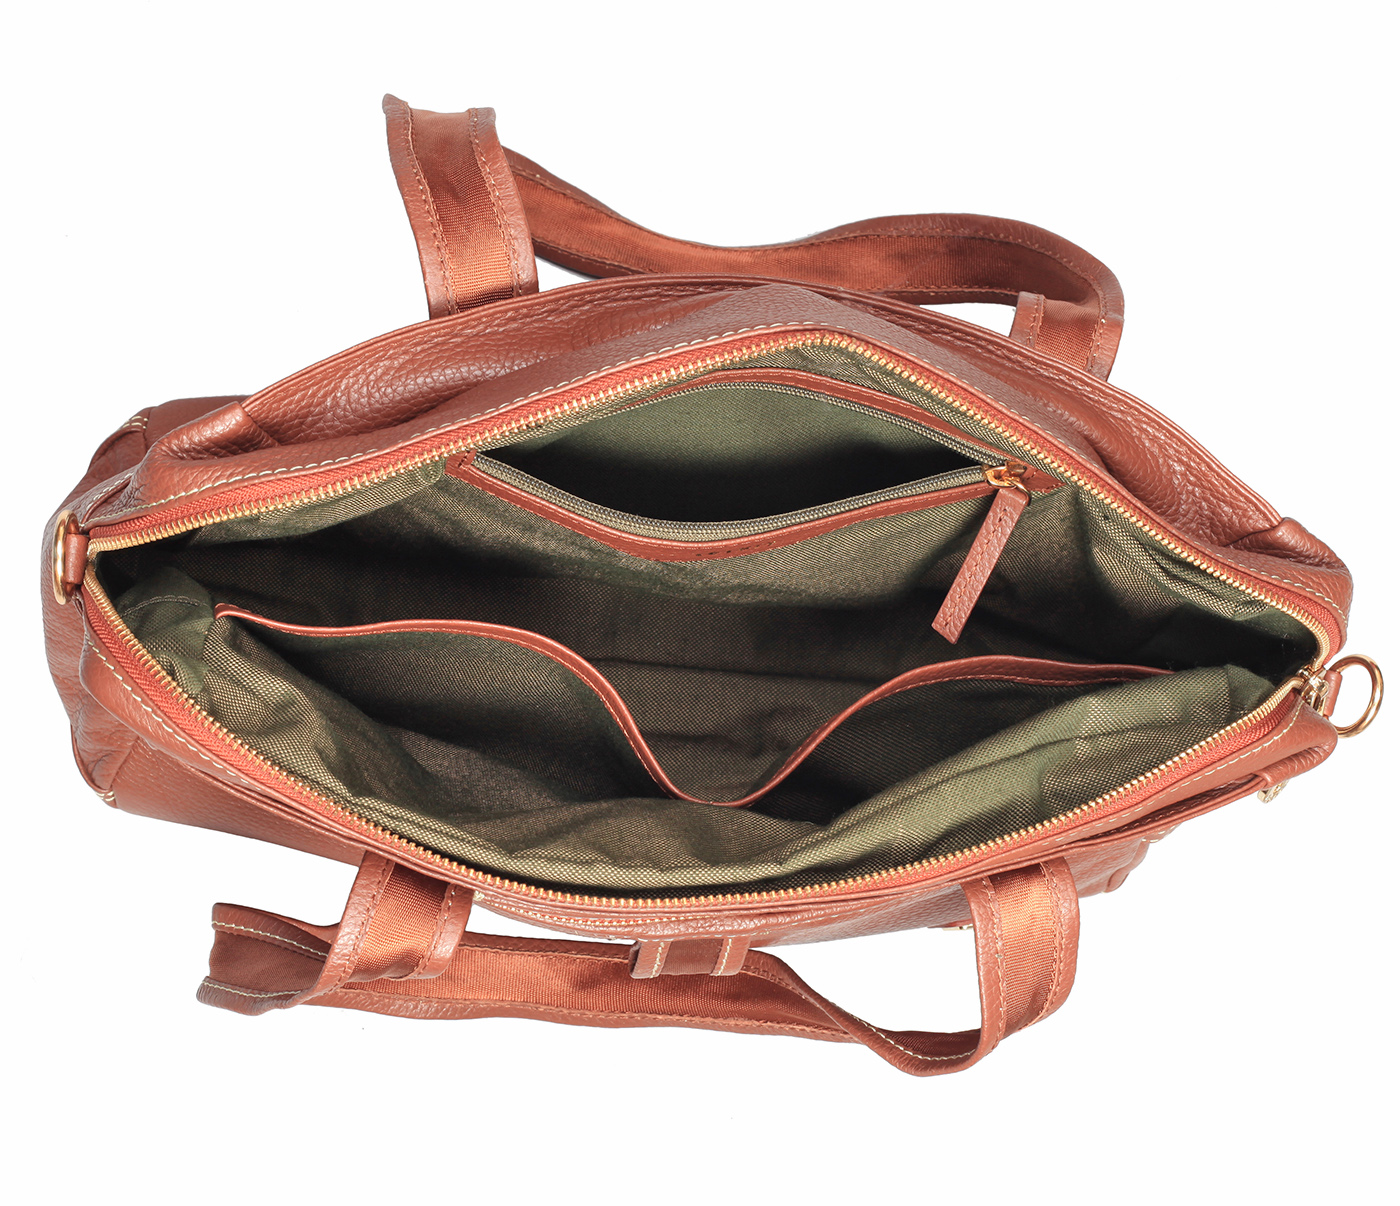 Handbag-Paulina-Shoulder work bag in Genuine Leather - Tan